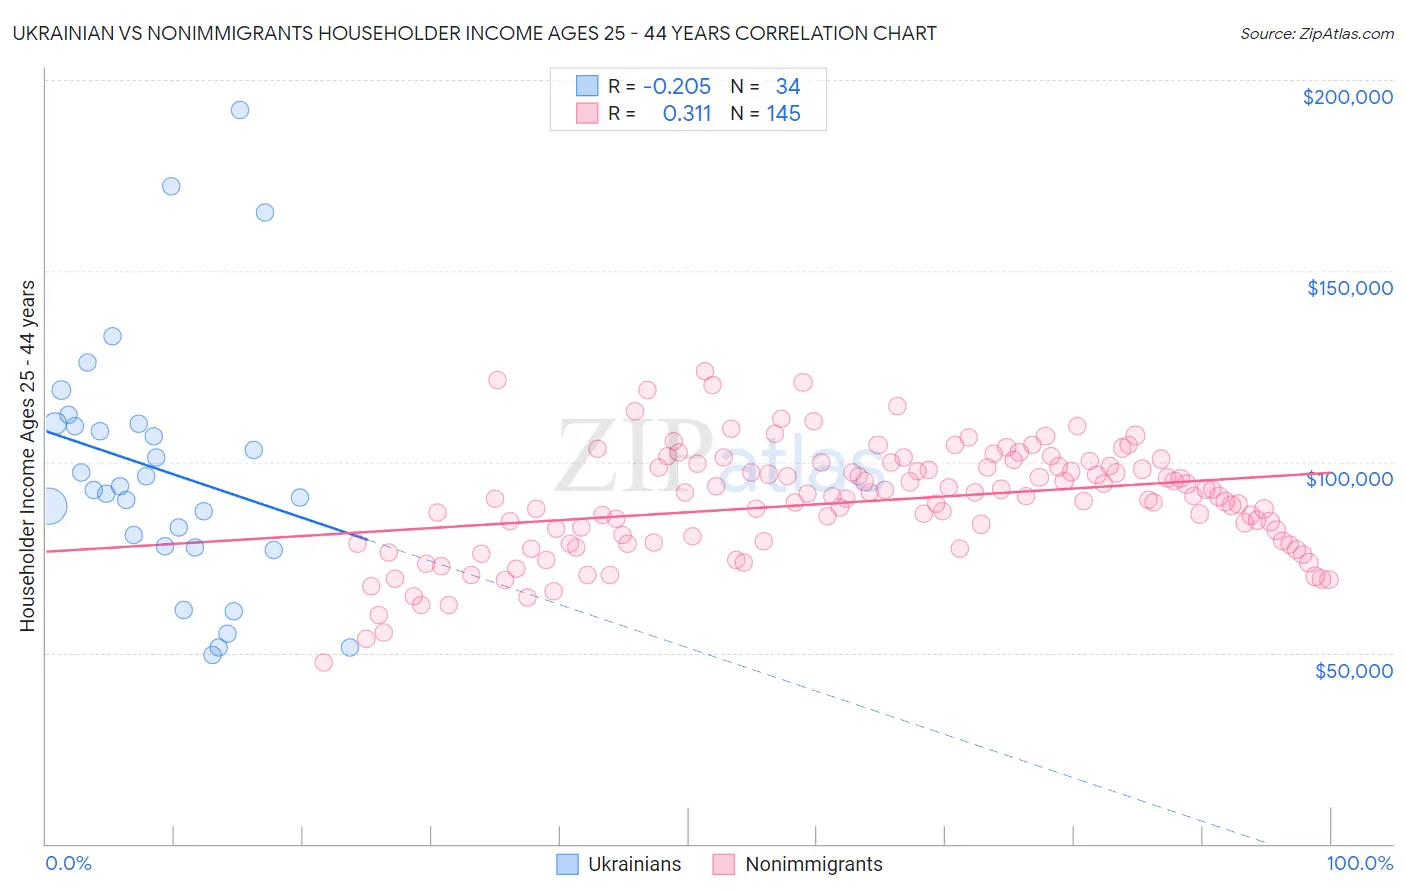 Ukrainian vs Nonimmigrants Householder Income Ages 25 - 44 years